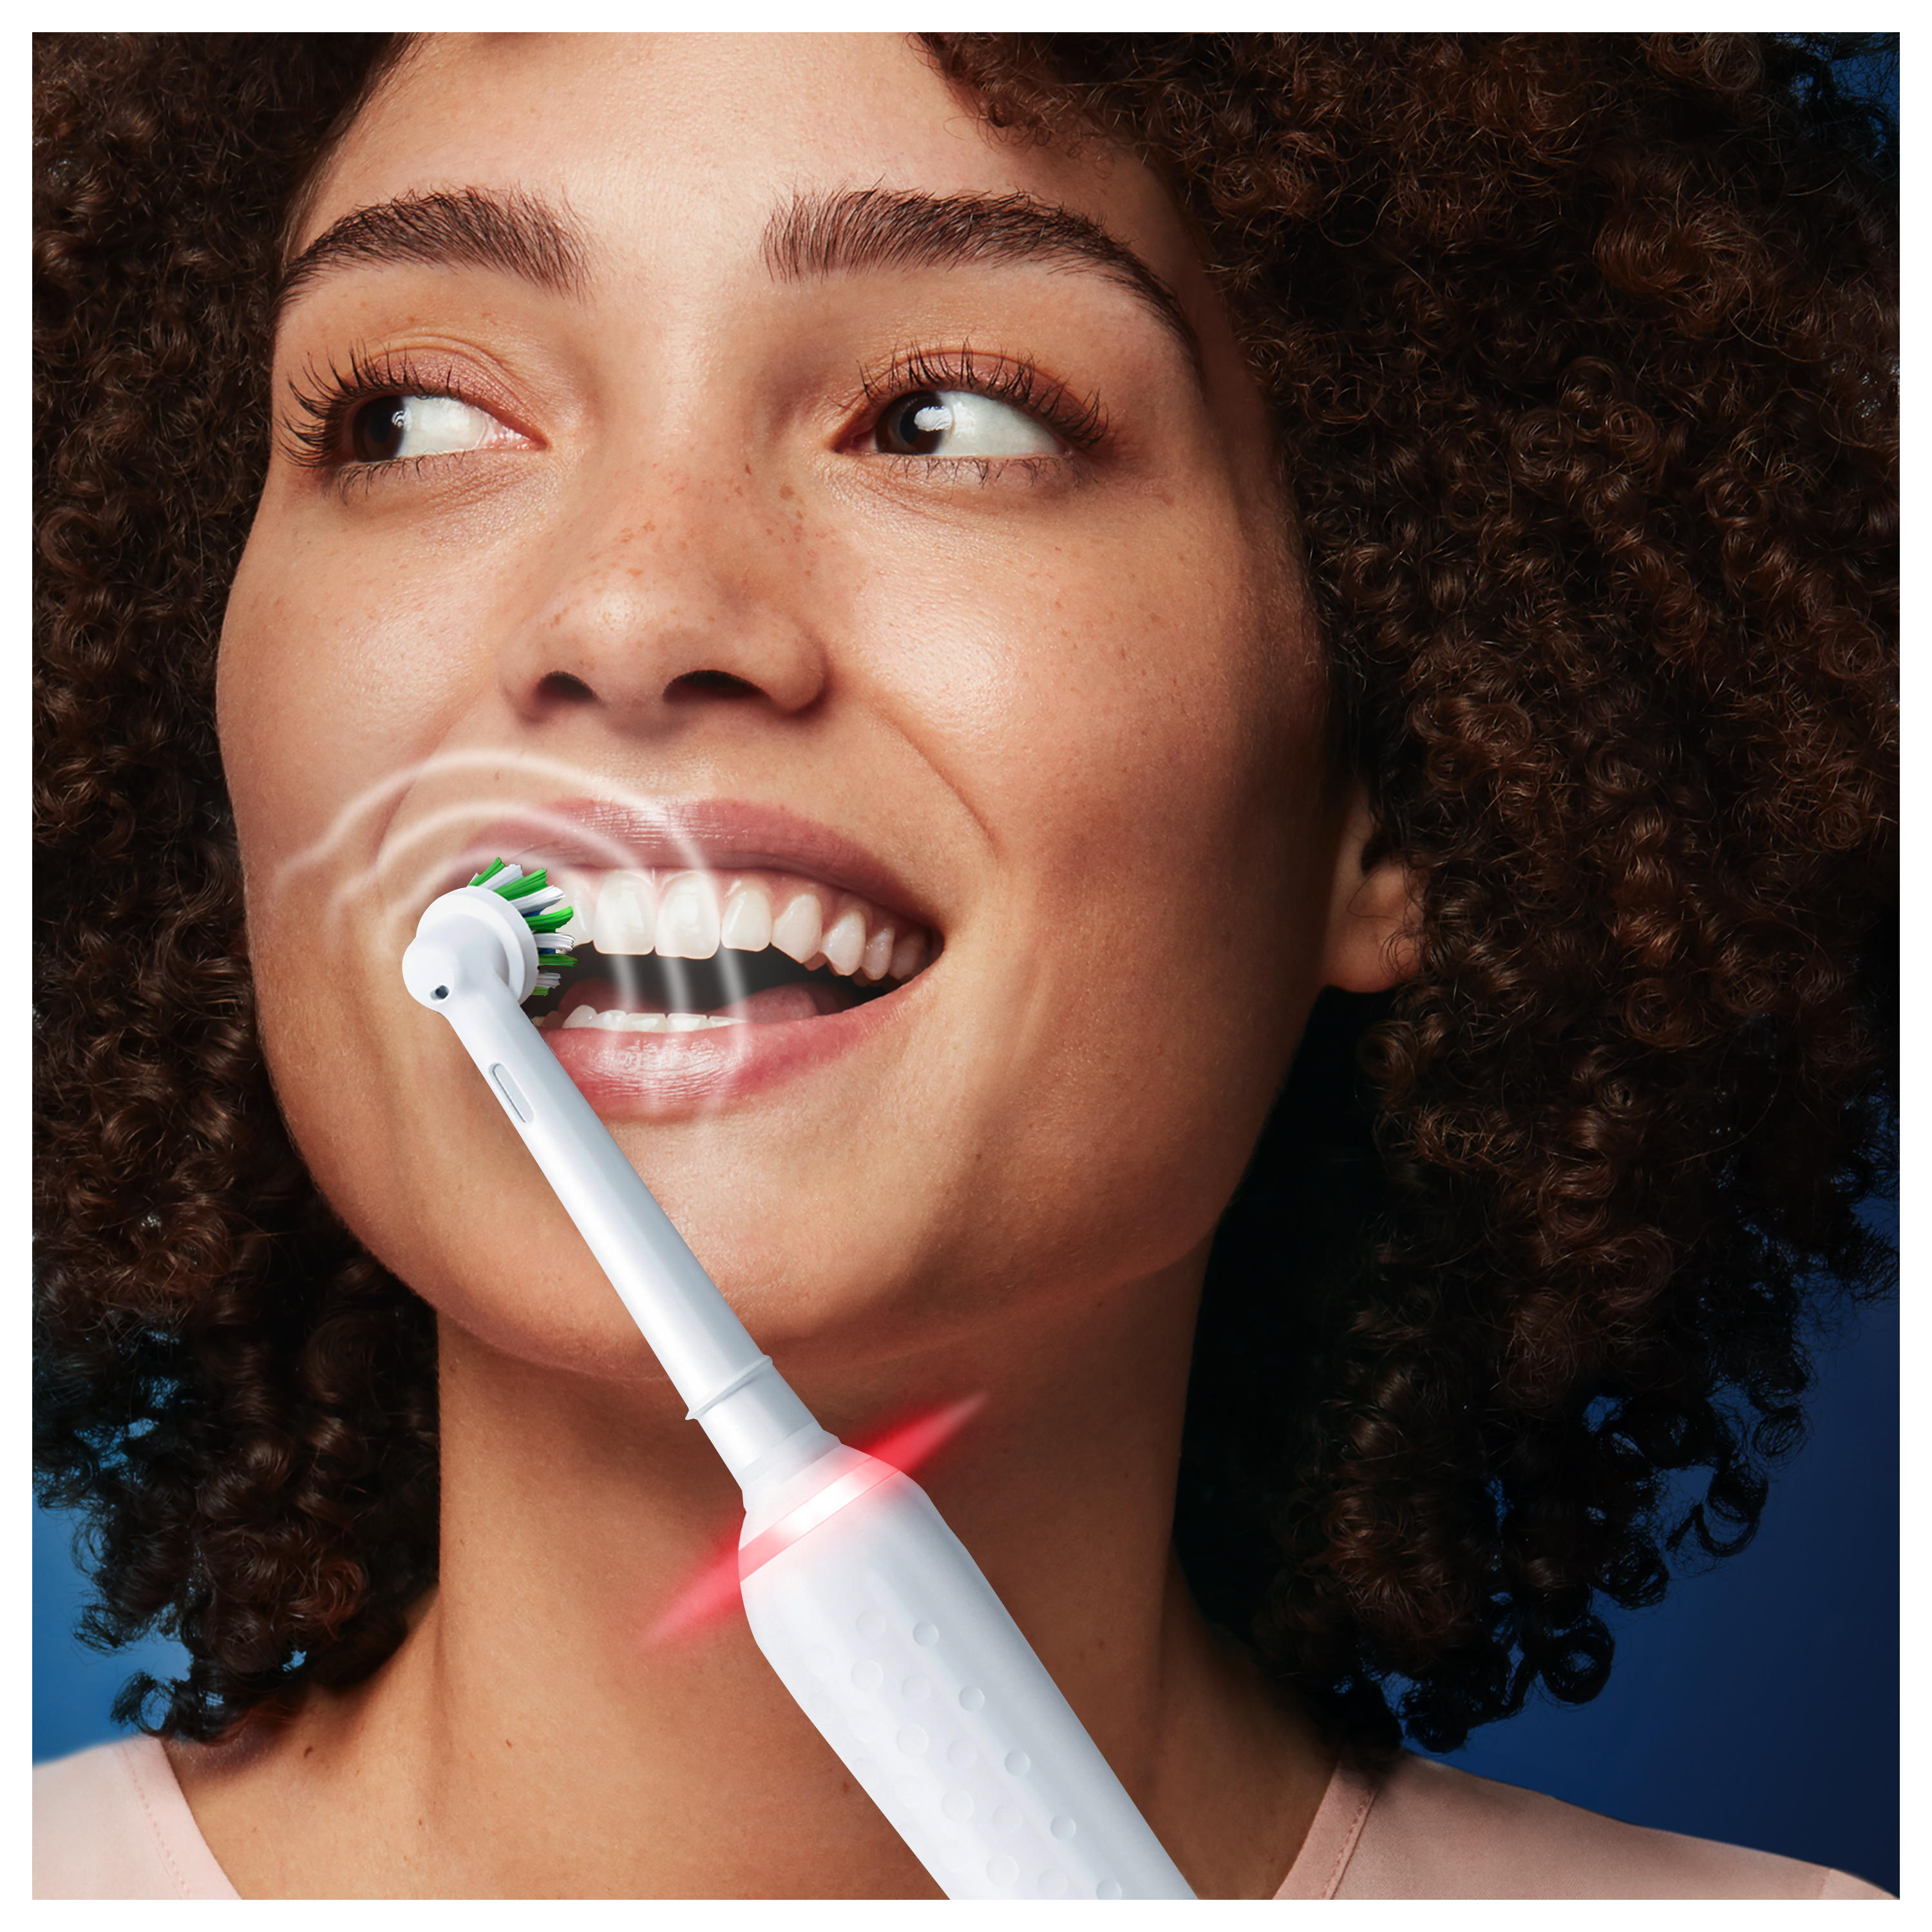 ORAL-B Pro 3 3000 Sensitive Clean Zahnbürste Elektrische White